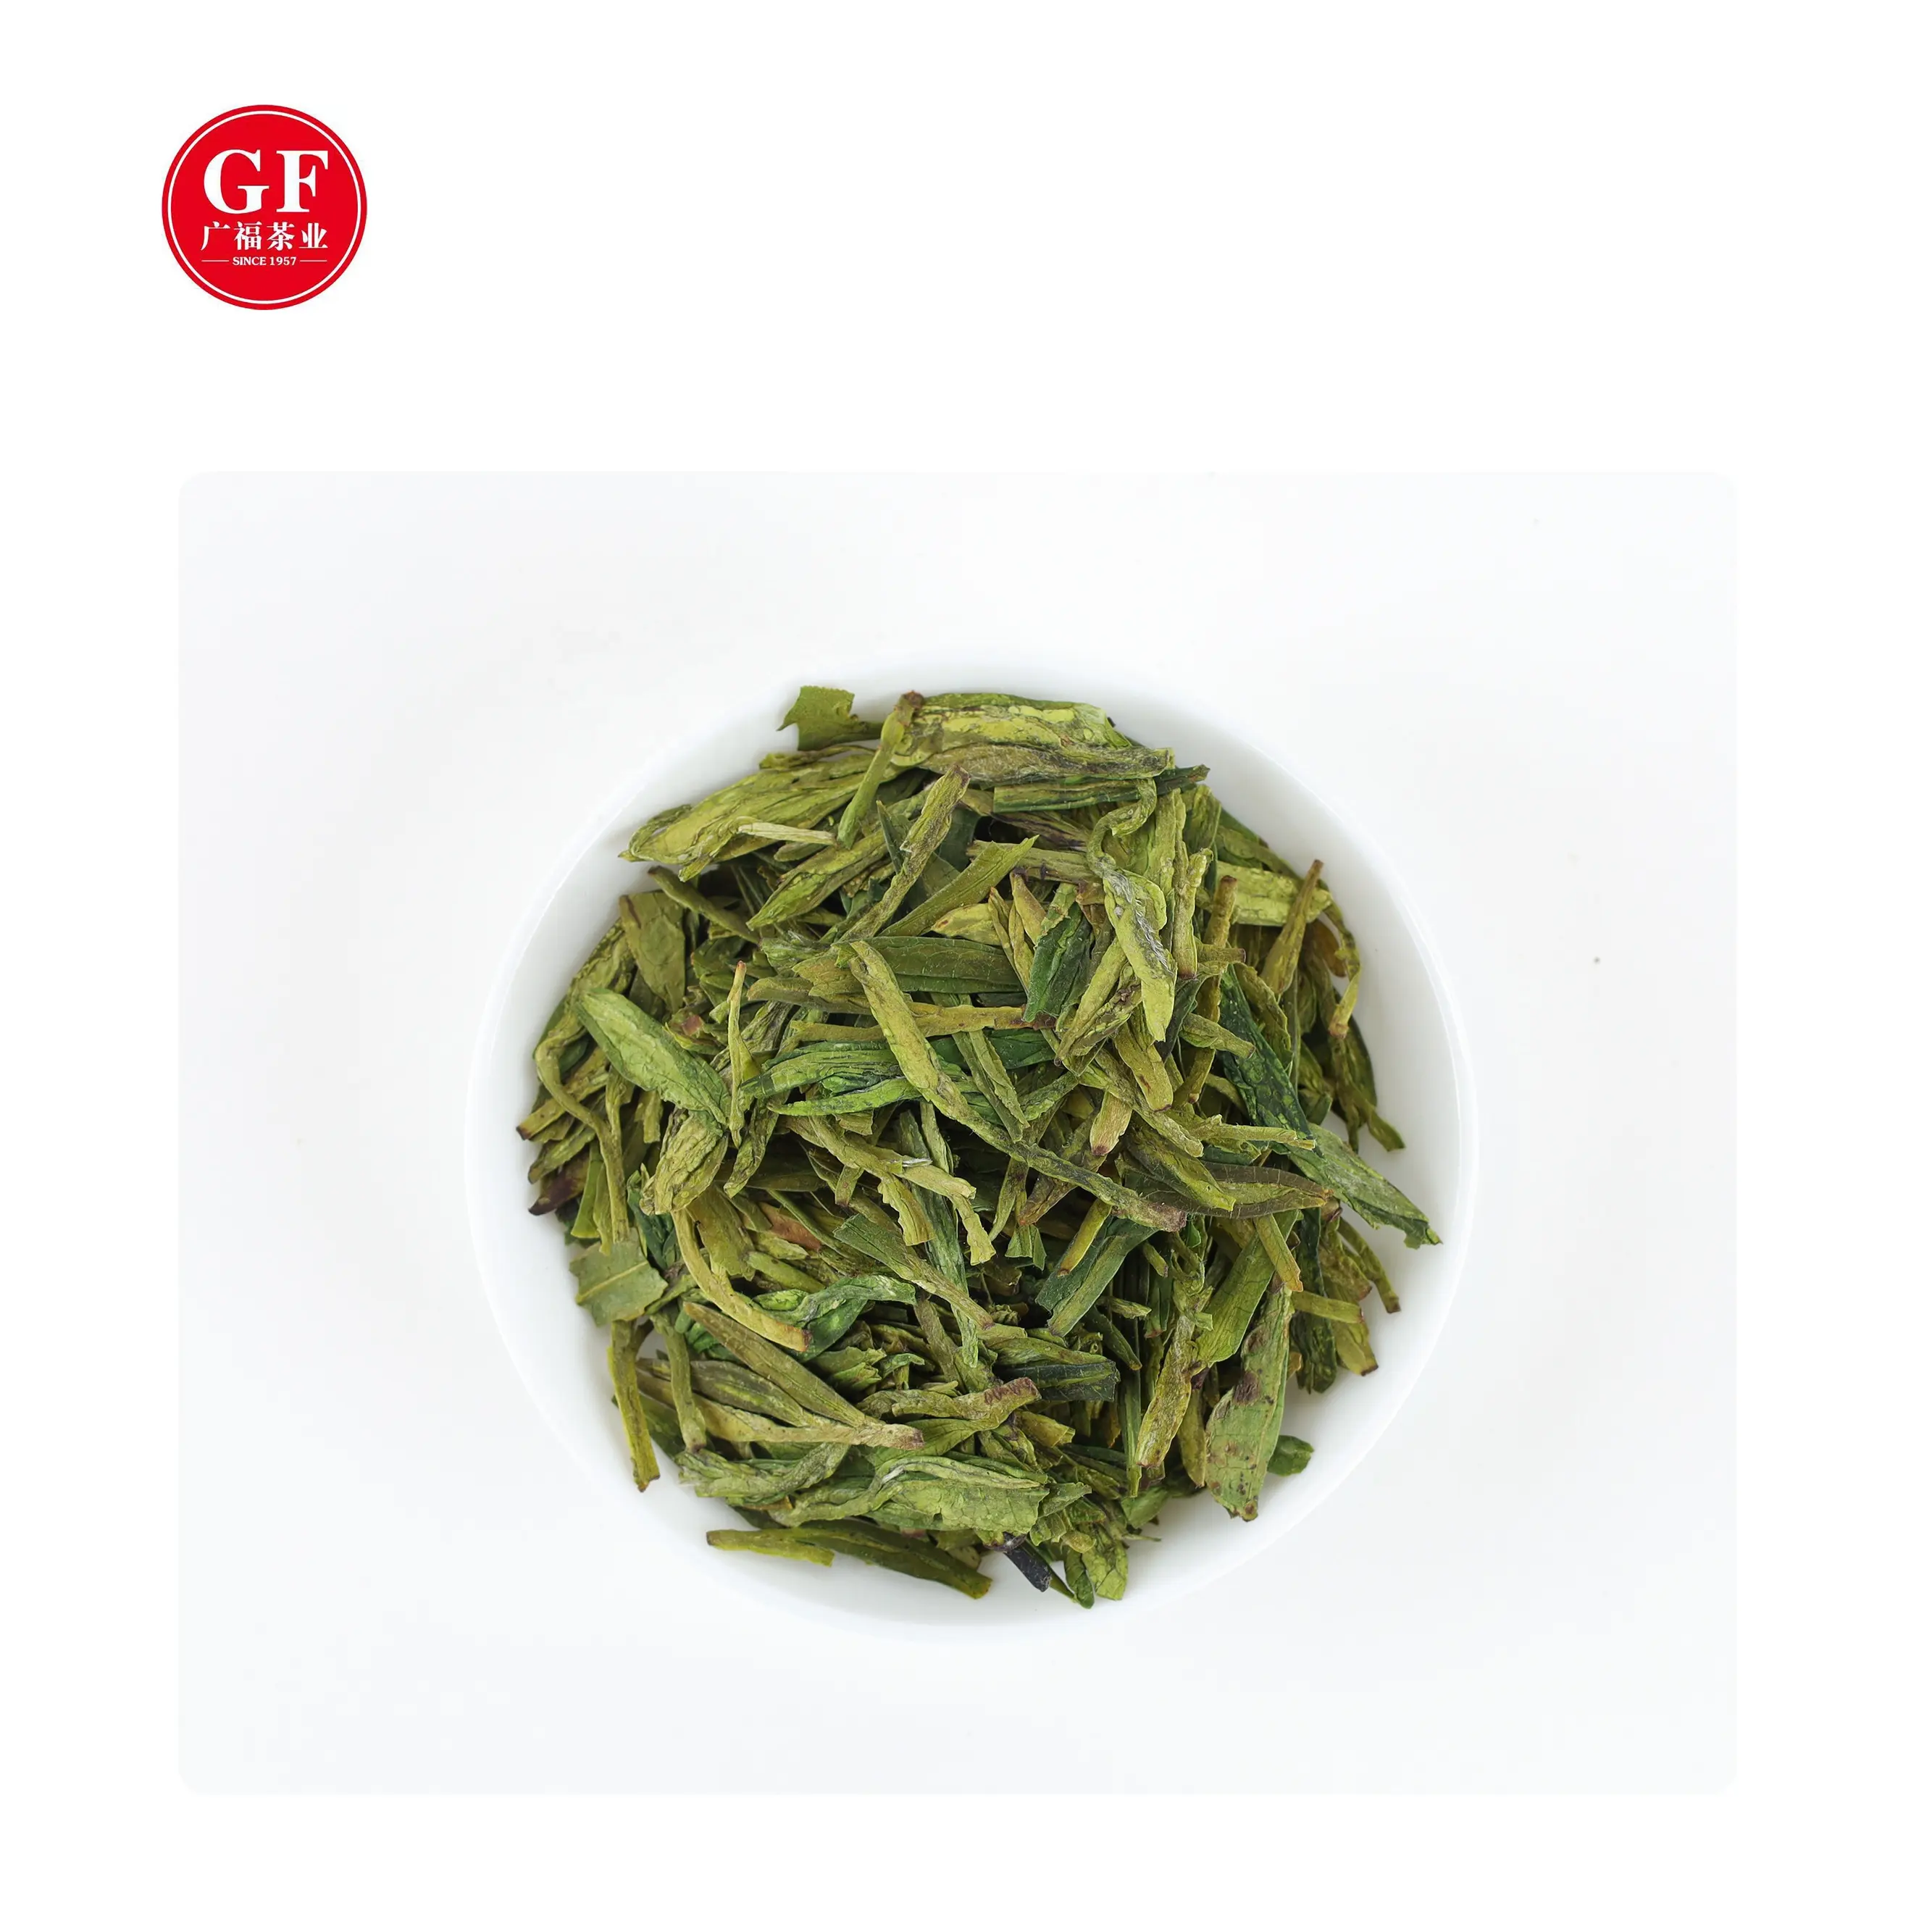 China best-selling high-quality green tea Longjing from Zhejiang Province